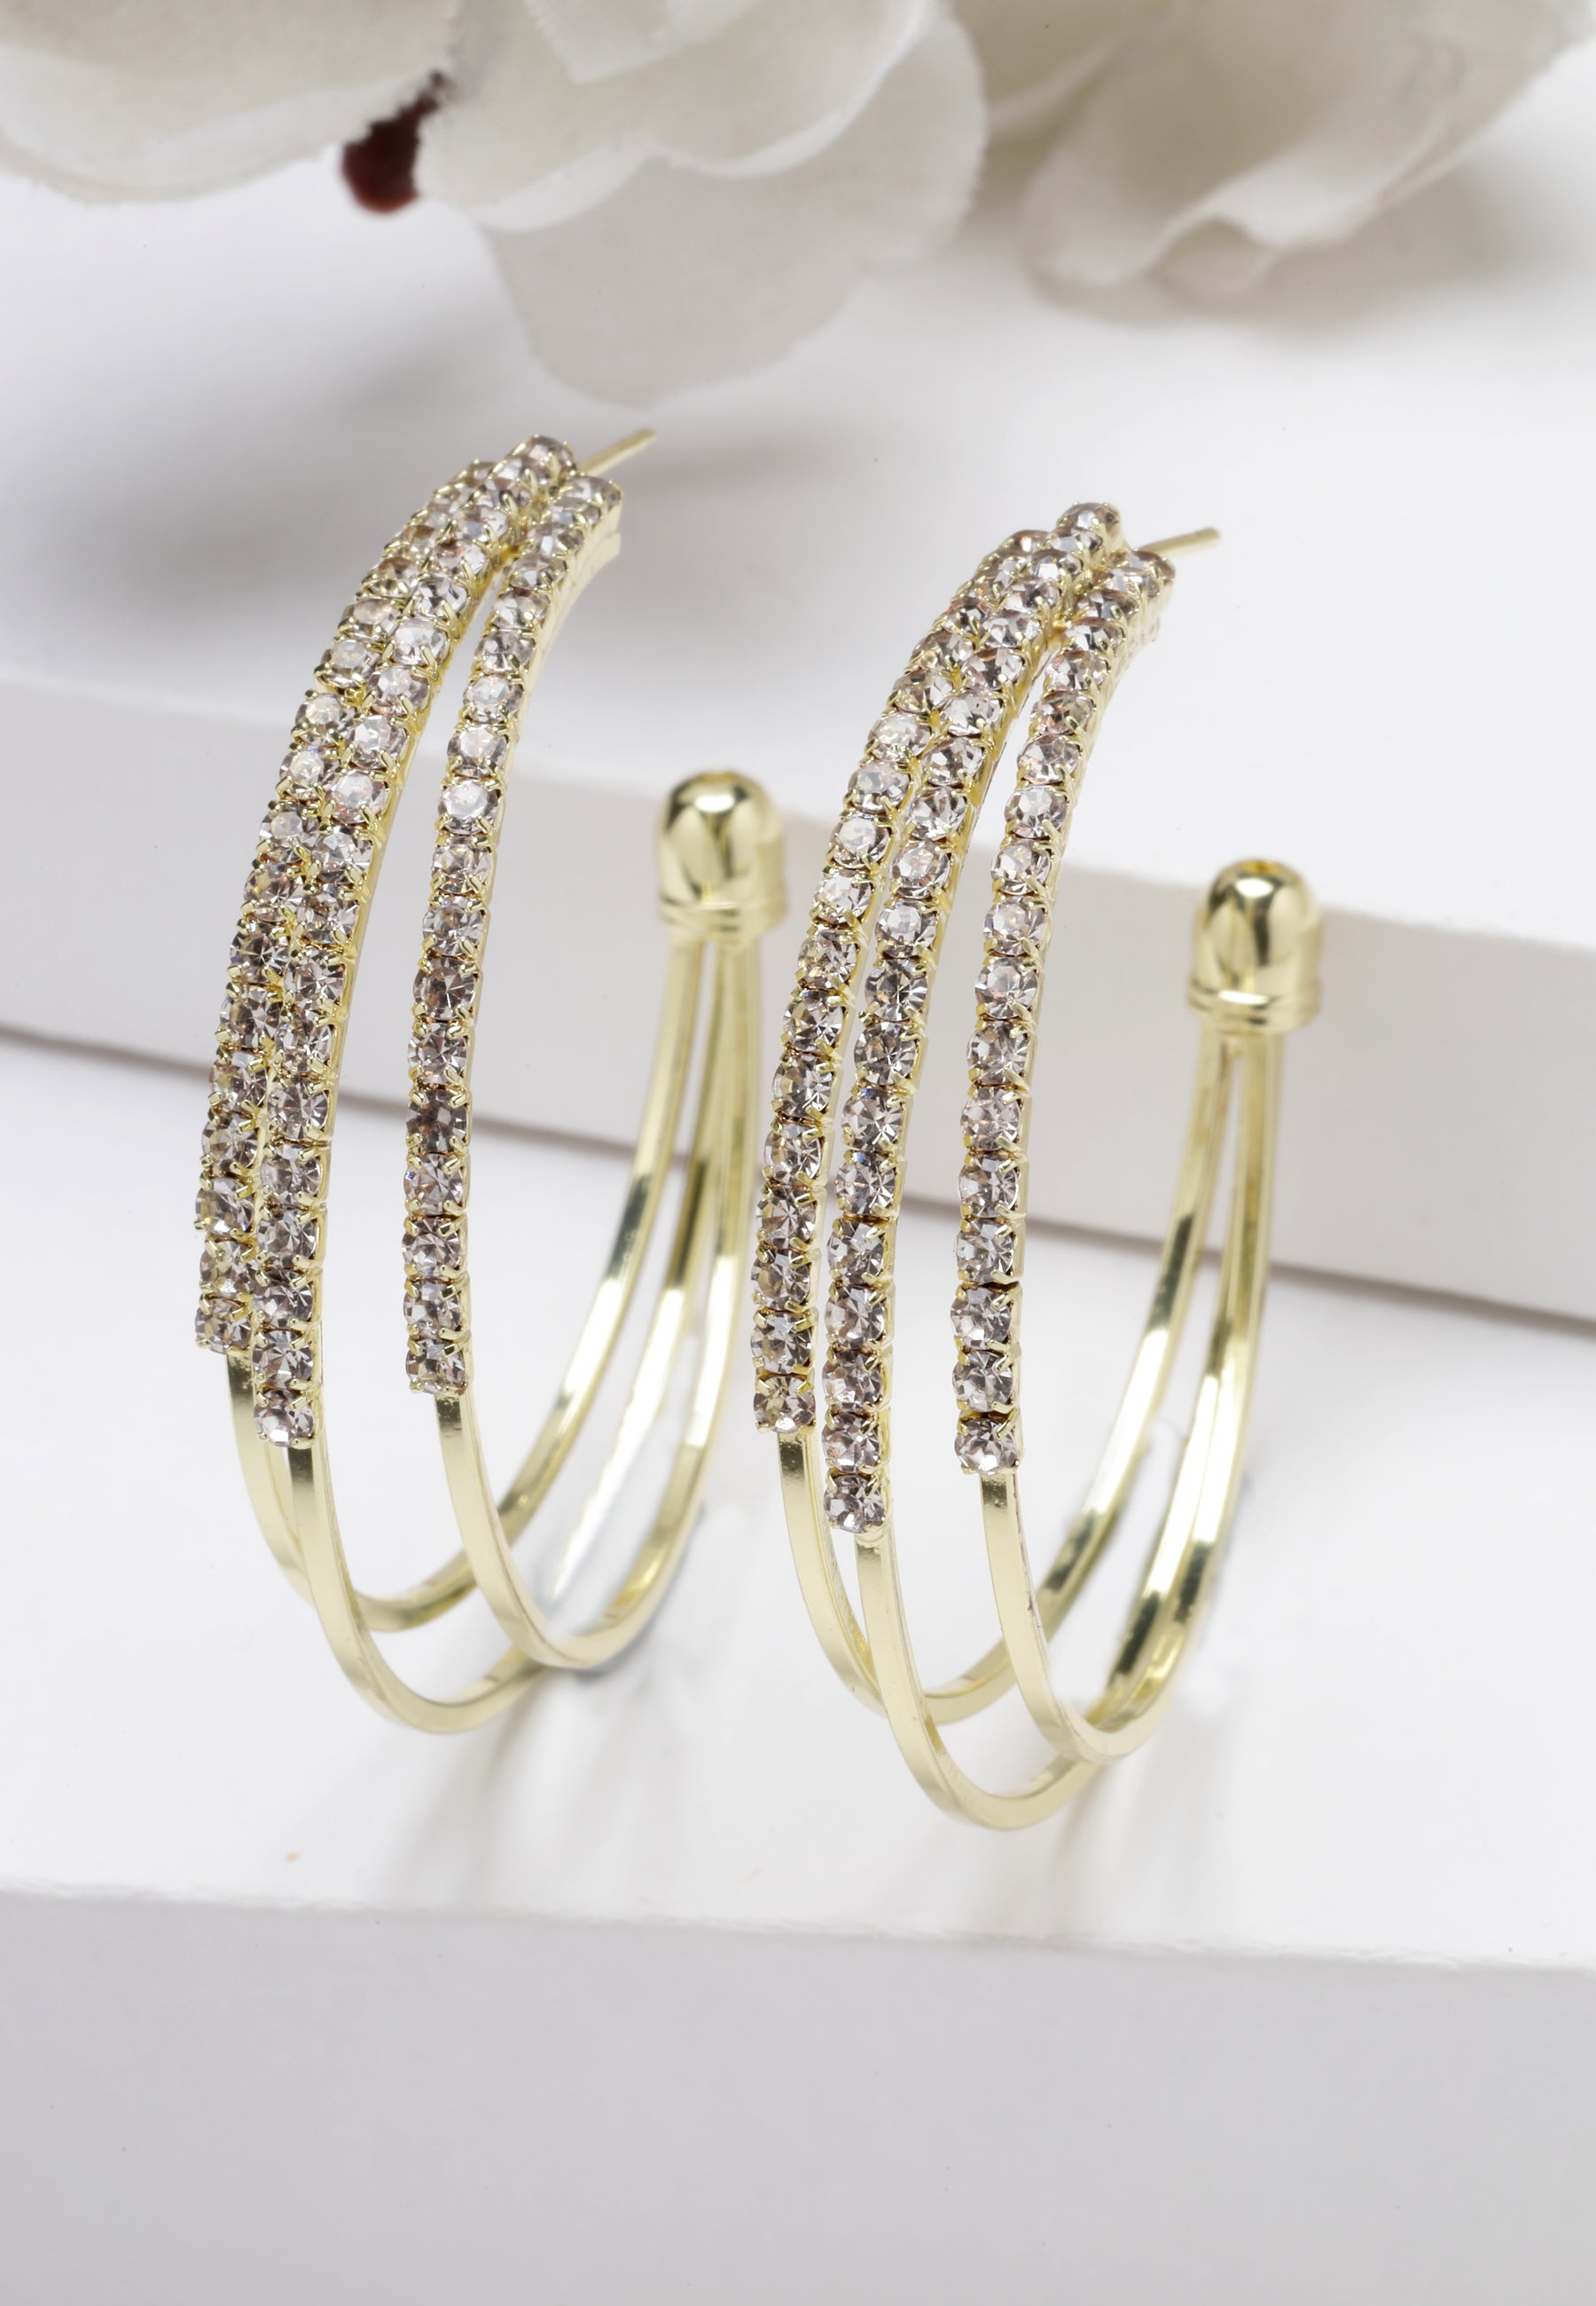 Avant-Garde Paris C Shape Gold-Colored Crystal Earrings